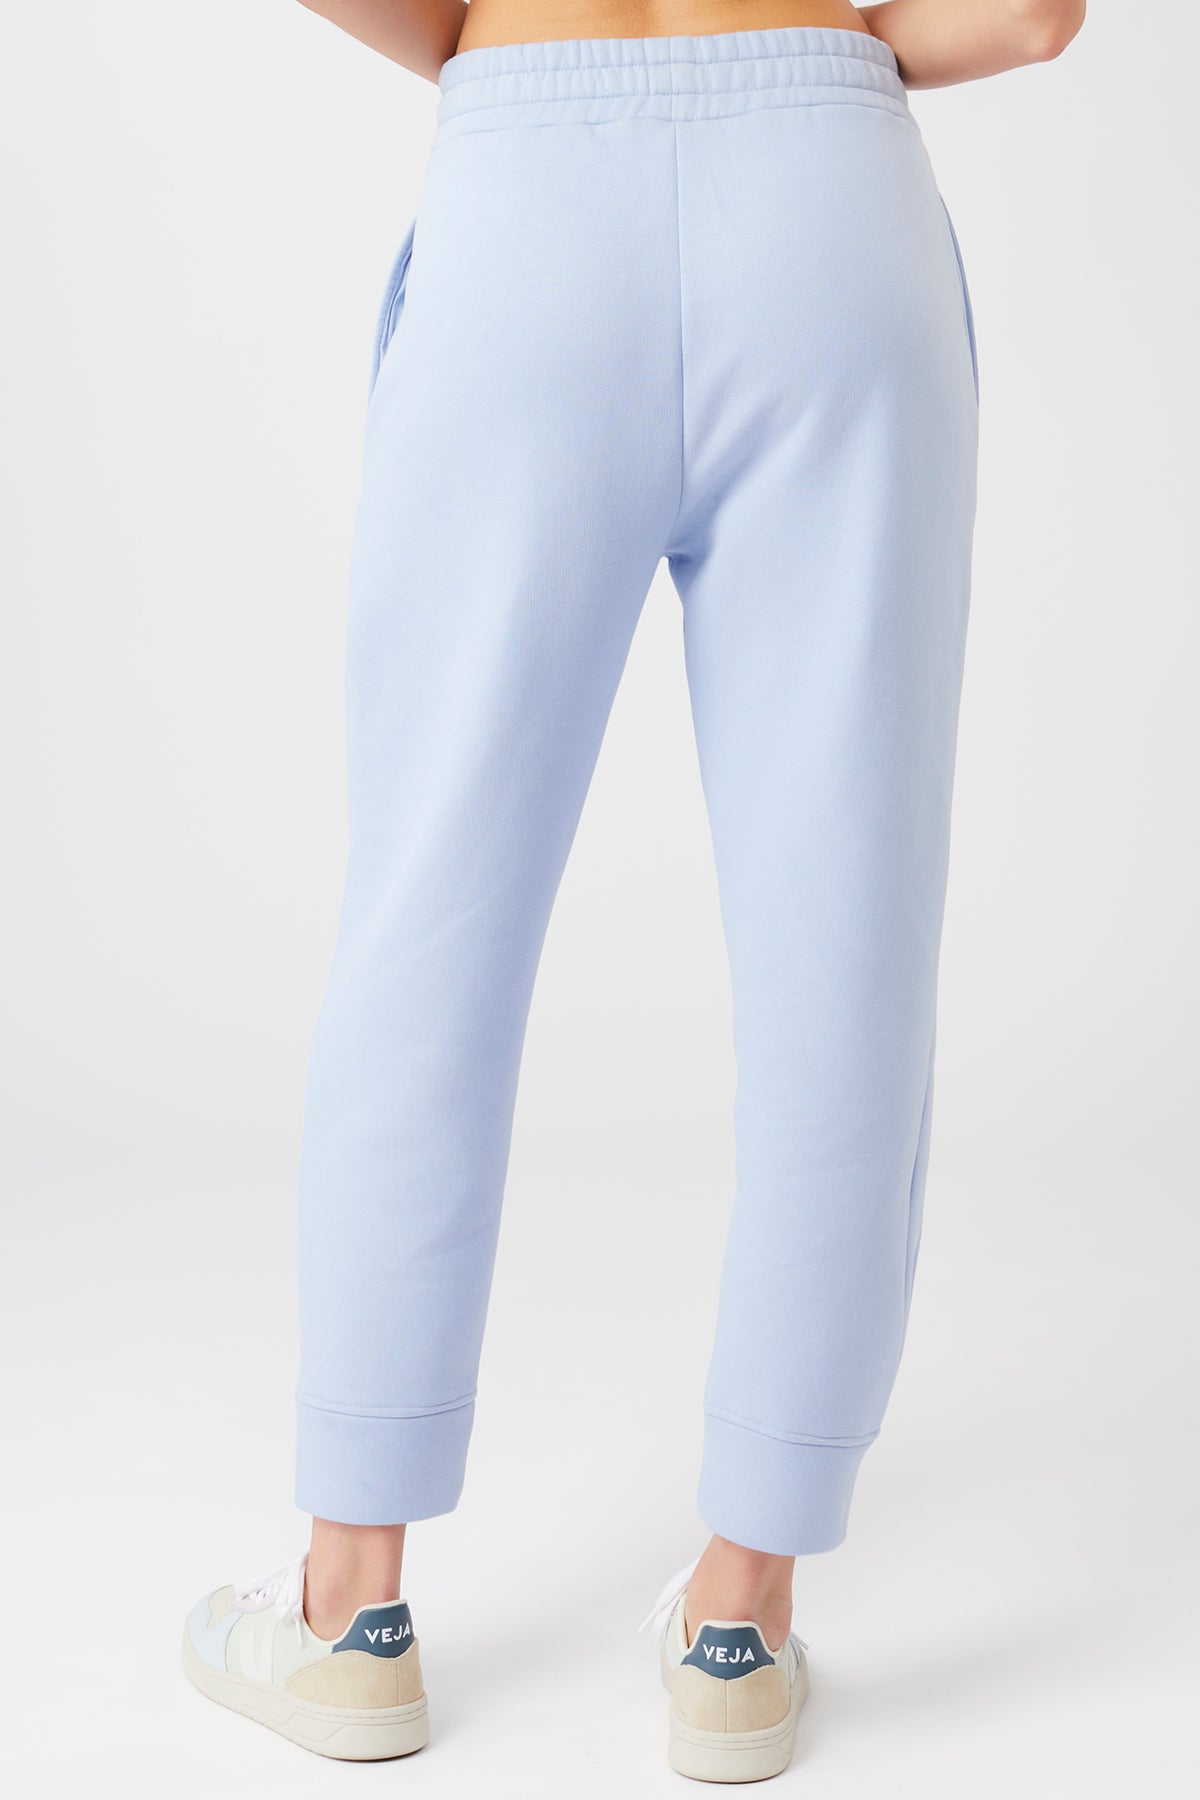 Mandala Yoga Pant Blau Rückseite - Natural Dye Track Pants